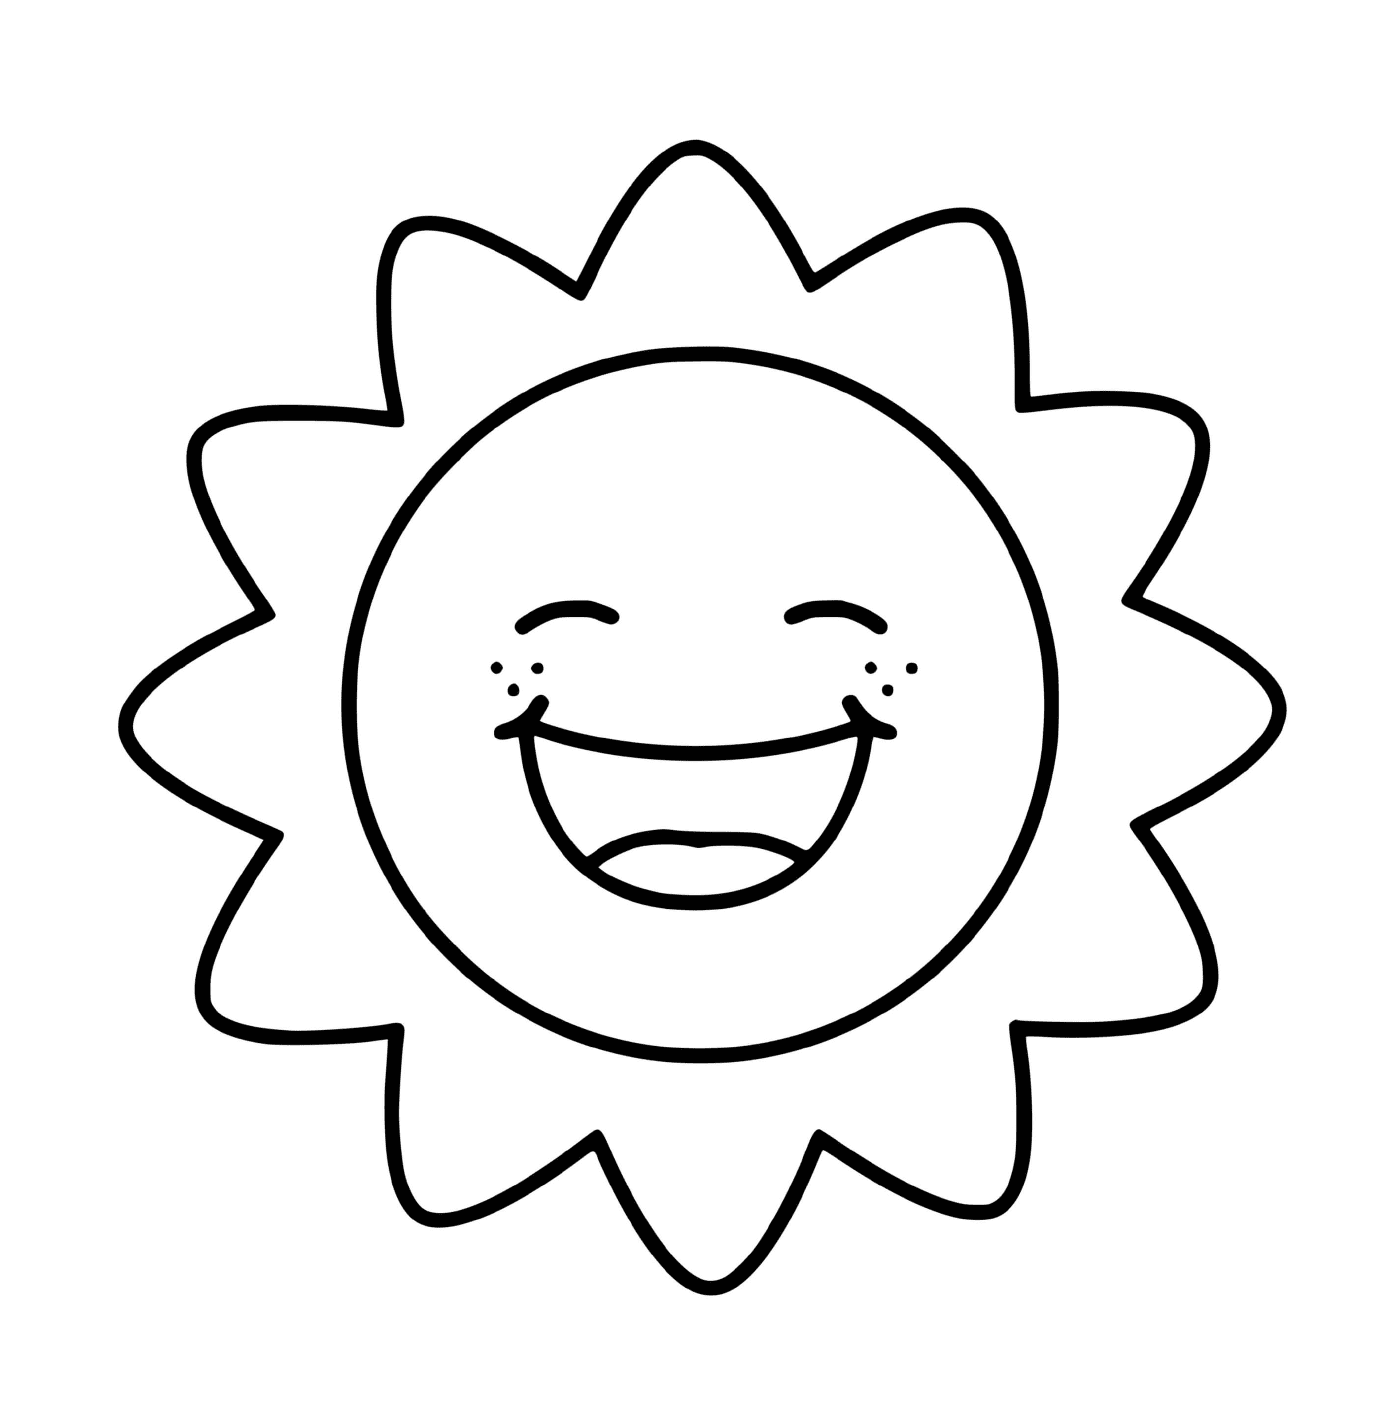   Soleil kawaii souriant 